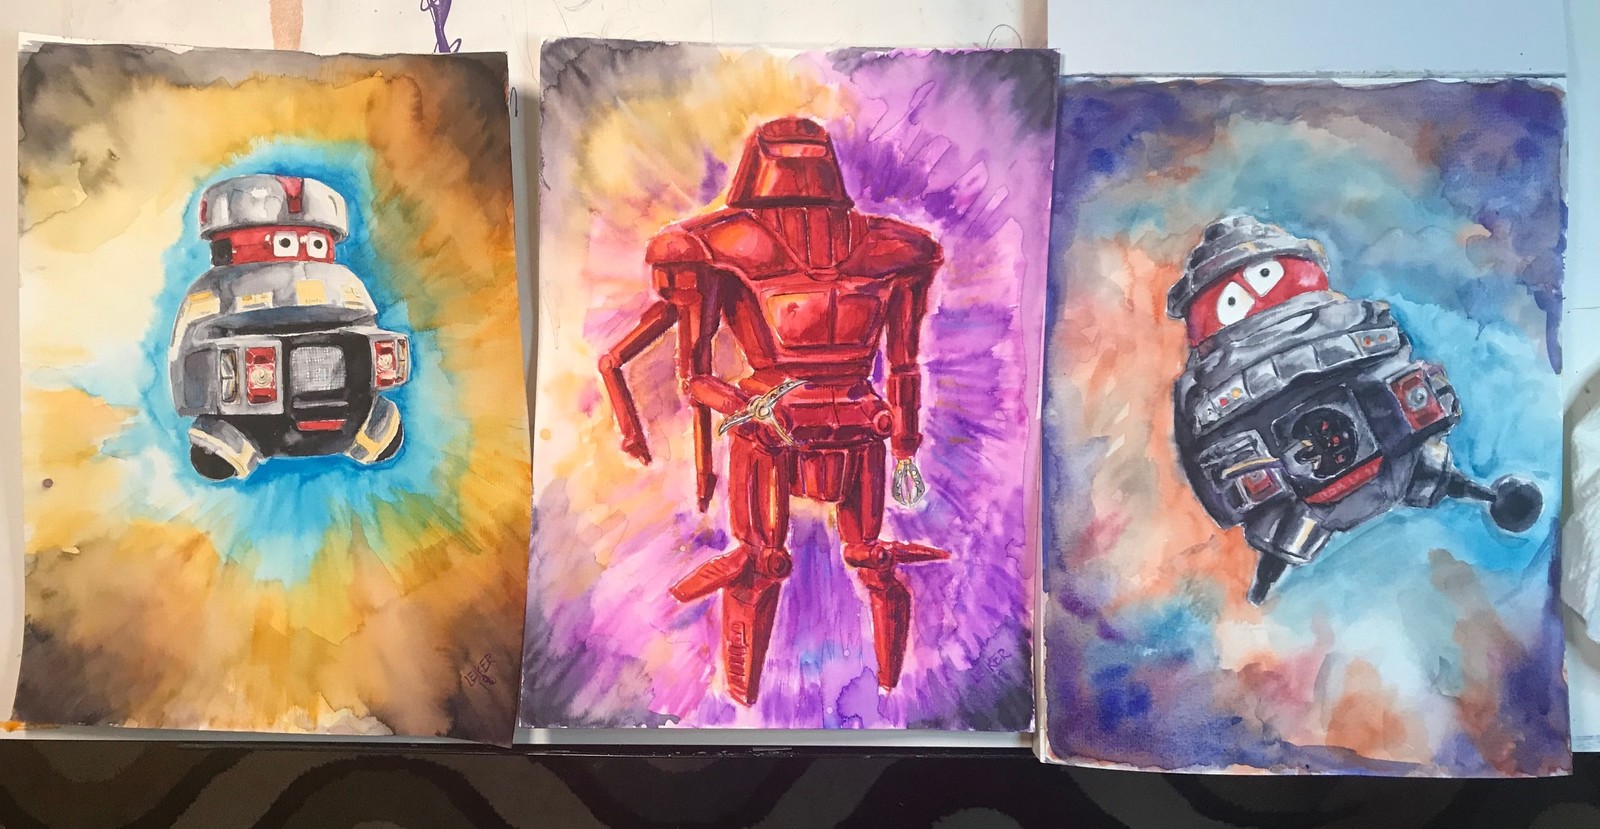 The 3 main robots.